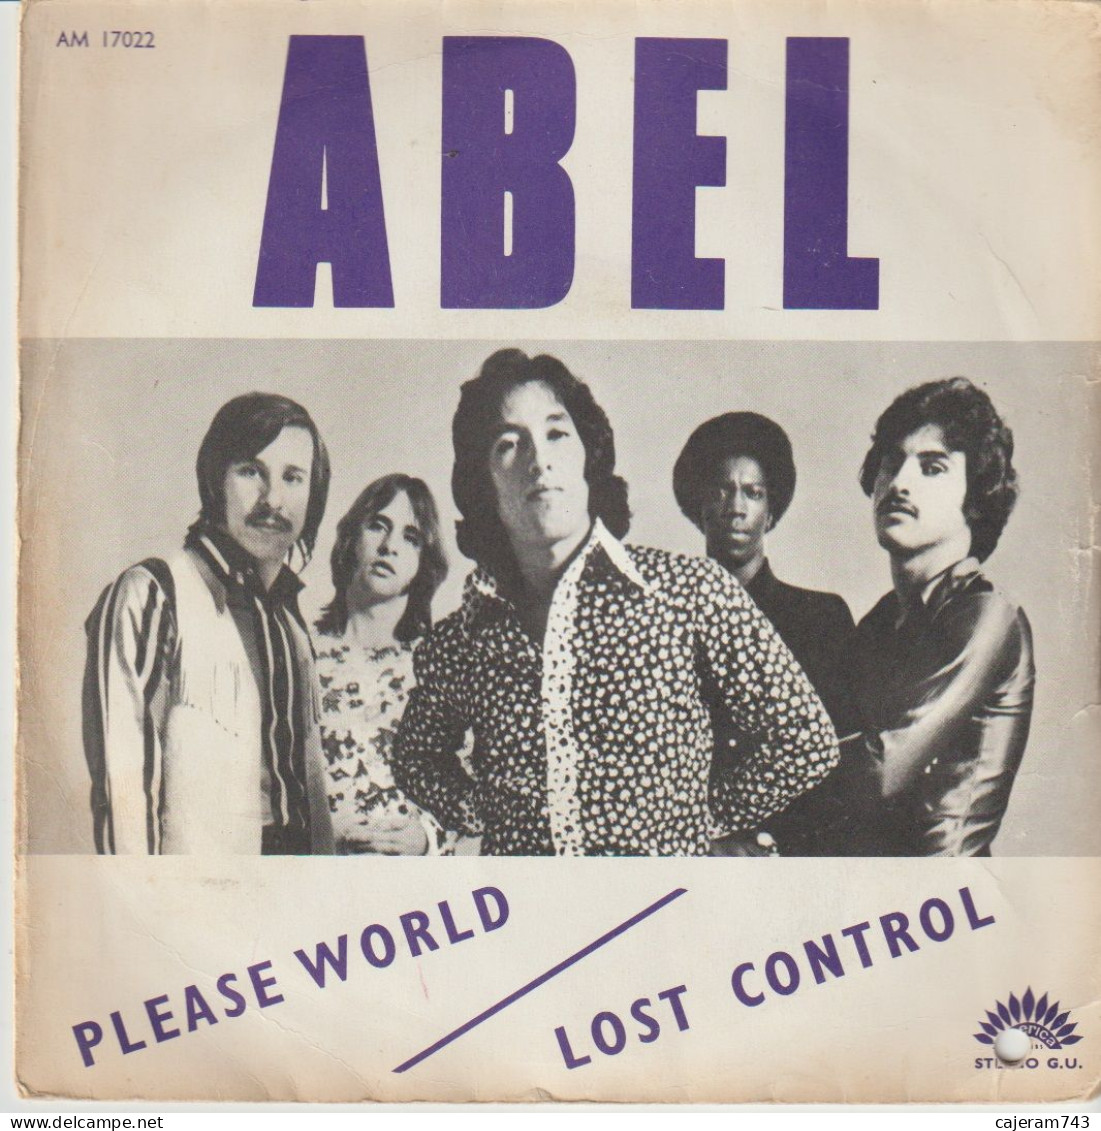 45T. ABEL. Please World - Lost Control - Disco, Pop